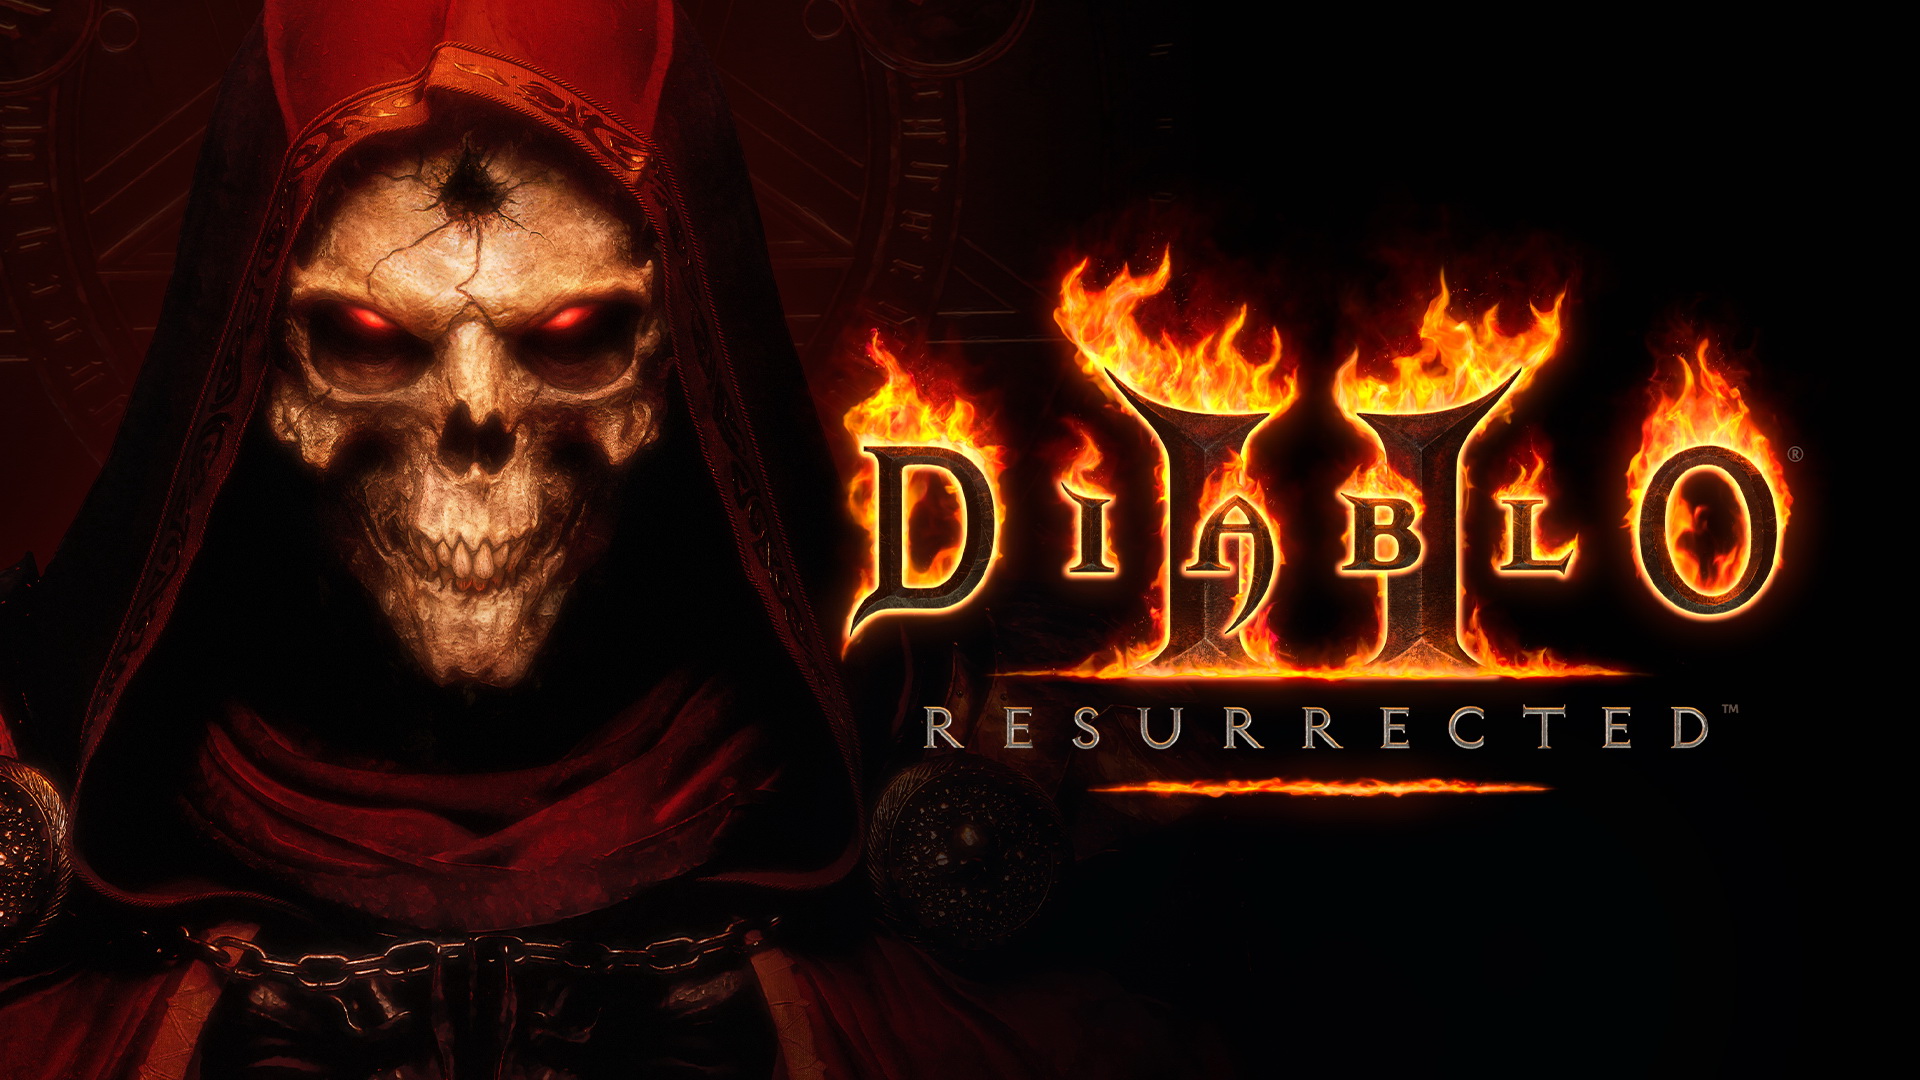 Diablo2 Resurrected